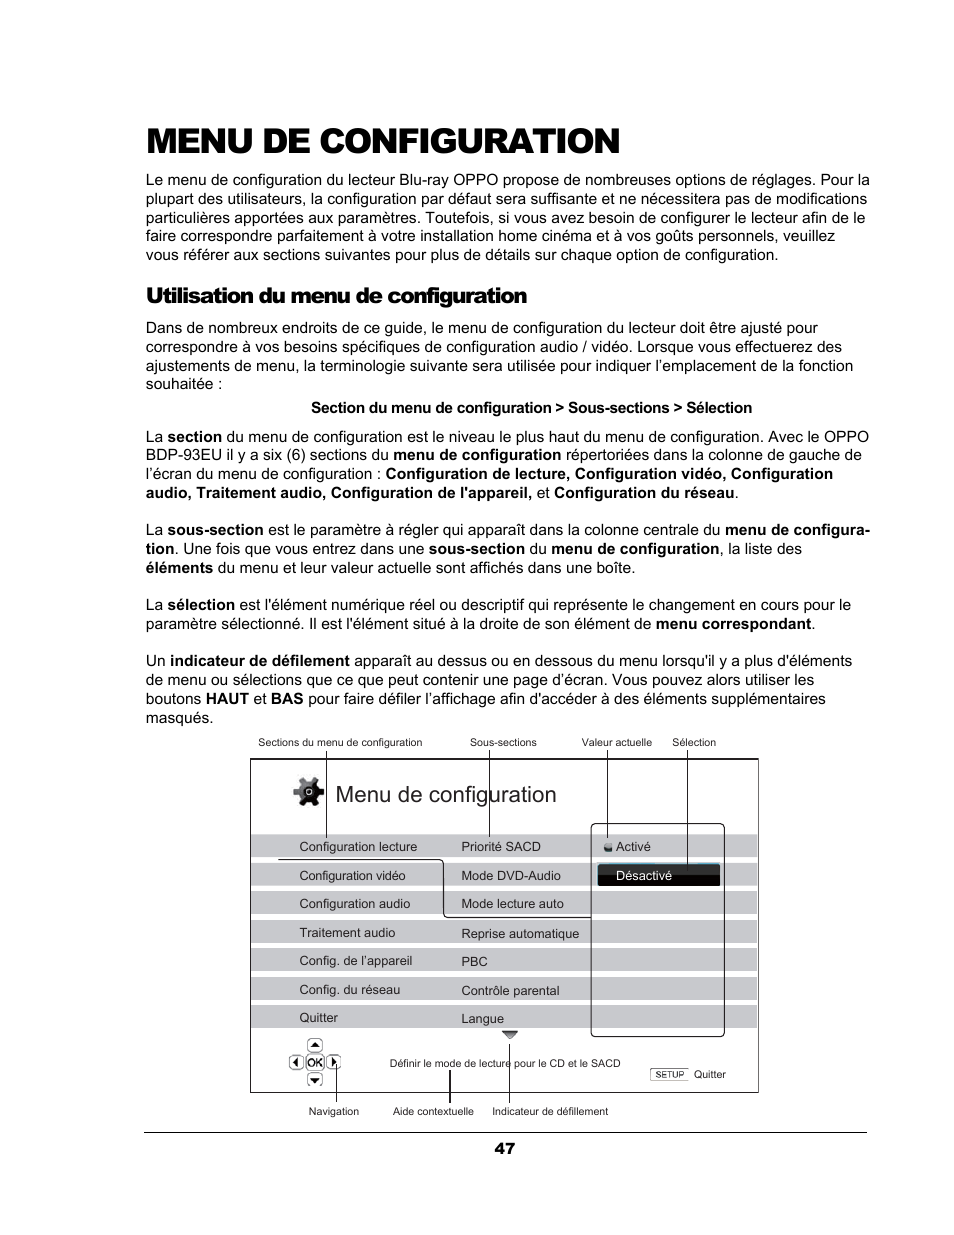 Menu de configuration, Utilisation du menu de configuration | Oppo BDP-93EU Manuel d'utilisation | Page 53 / 92